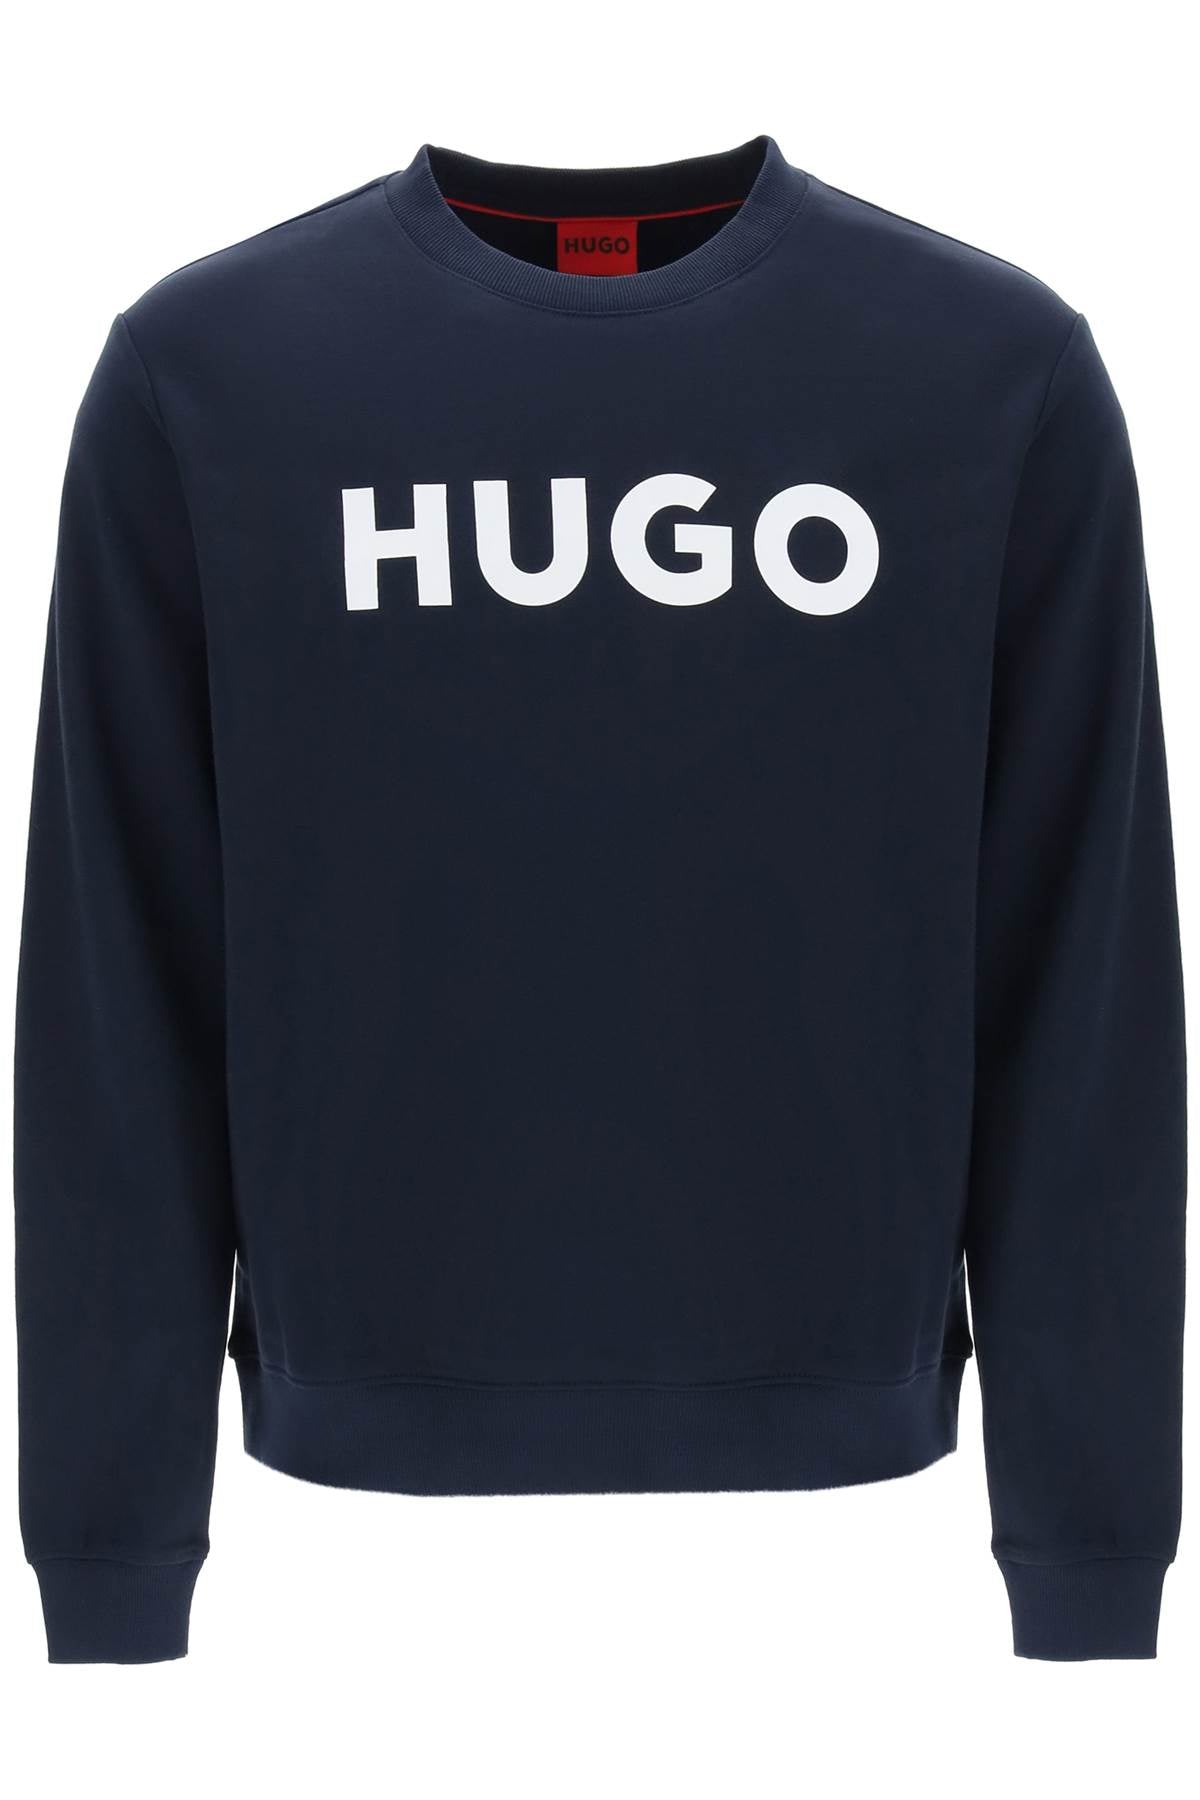 Hugo dem logo sweatshirt-0